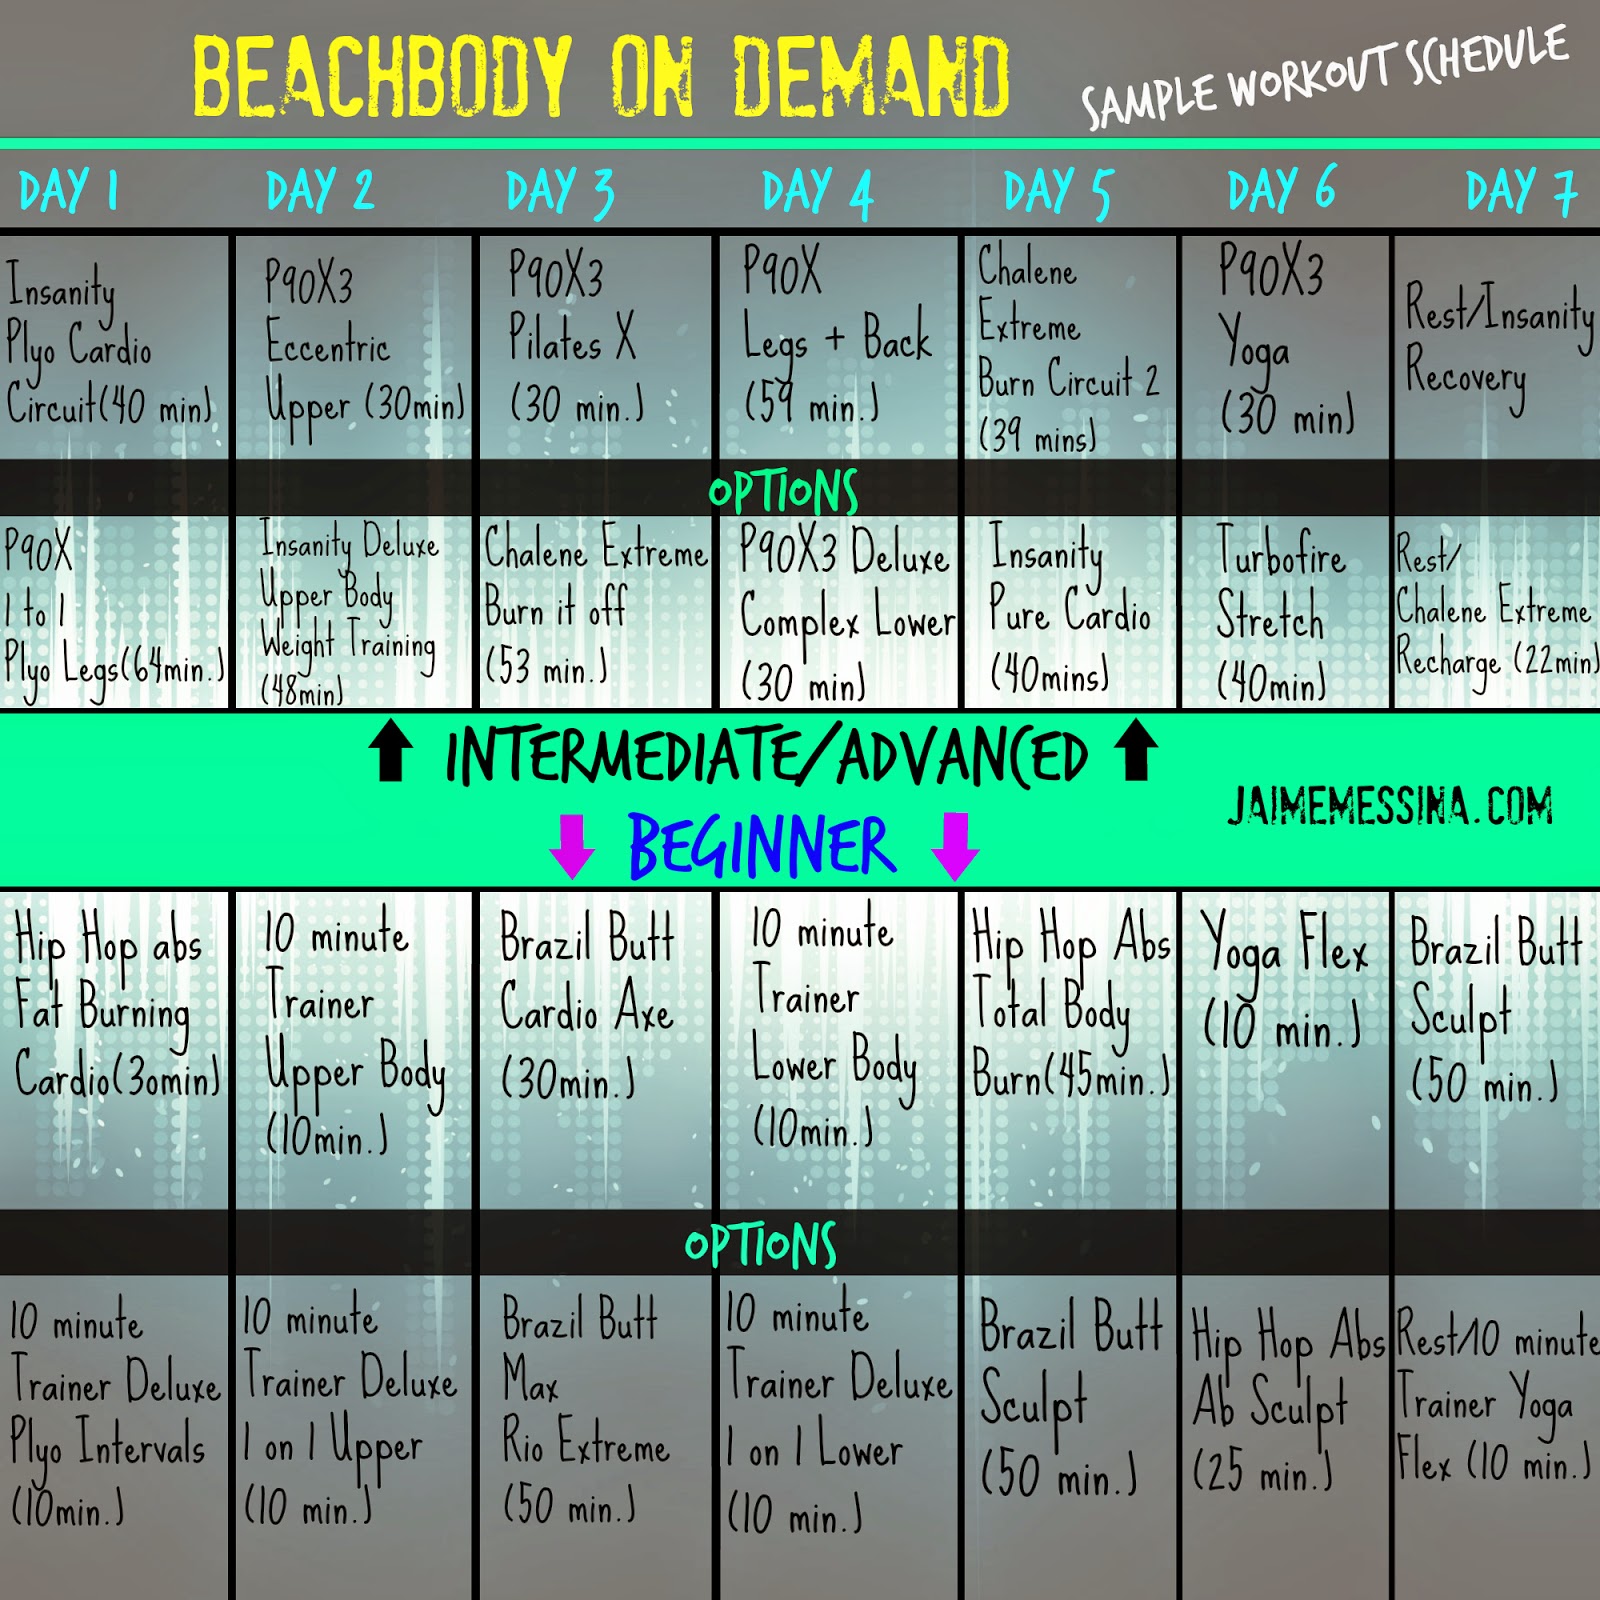 #BOD,Beachbody On Demand, Free Workout Schedule, Workout Hybrid Schedule, insanity, p90x, turbofire, chalene extreme